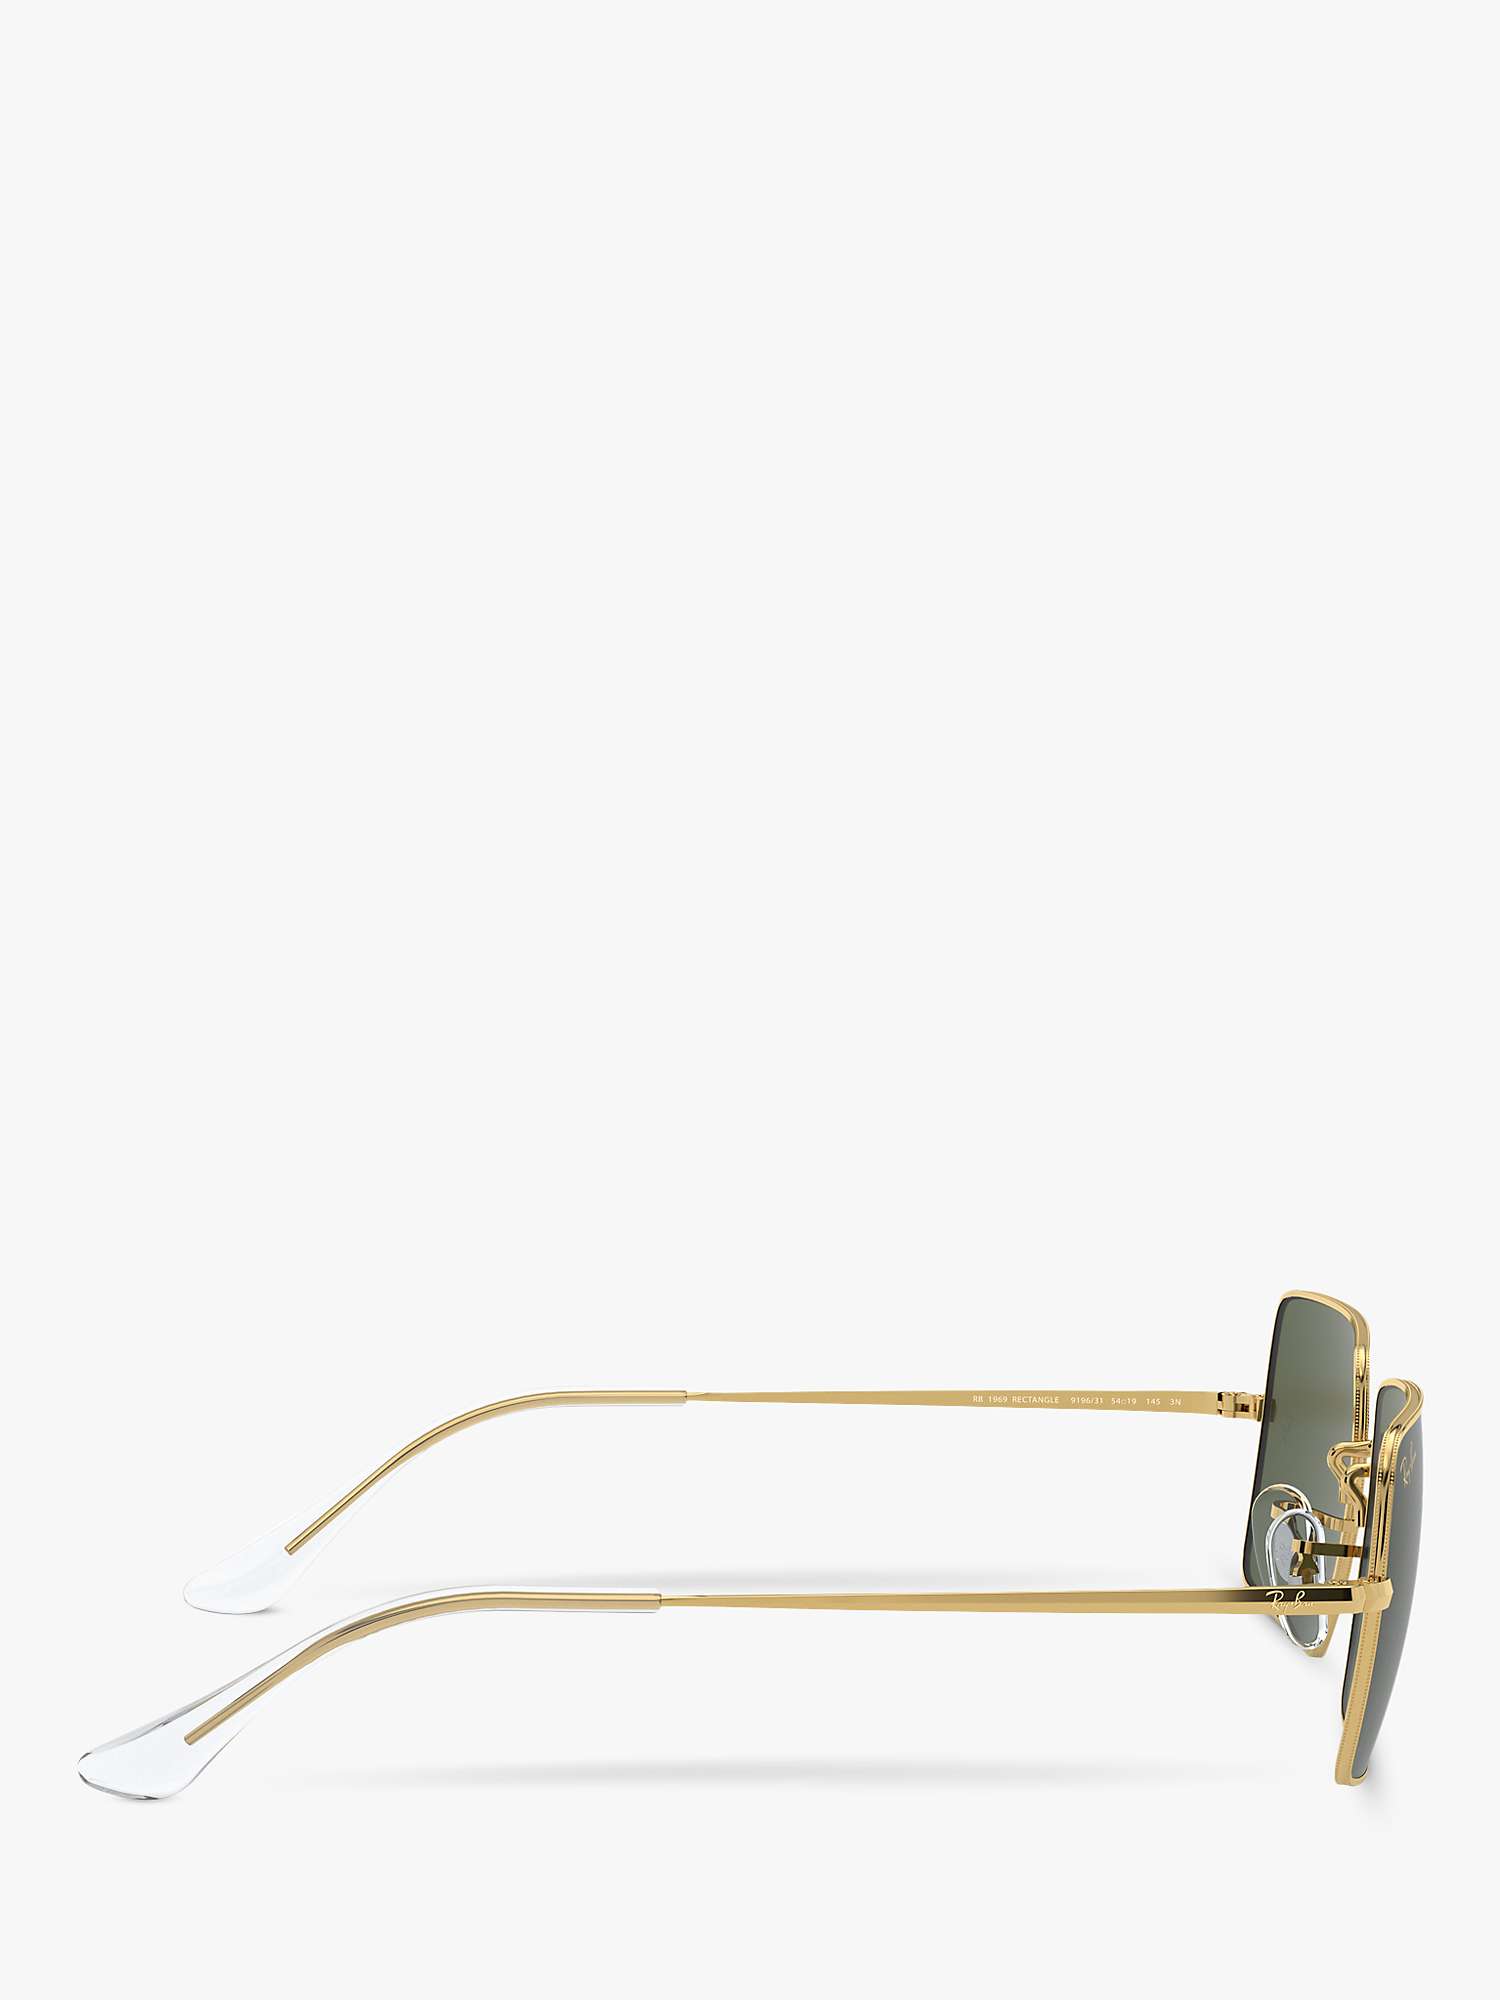 Buy Ray-Ban RB1969 Unisex Rectangular Sunglasses, Legend Gold/Green Online at johnlewis.com